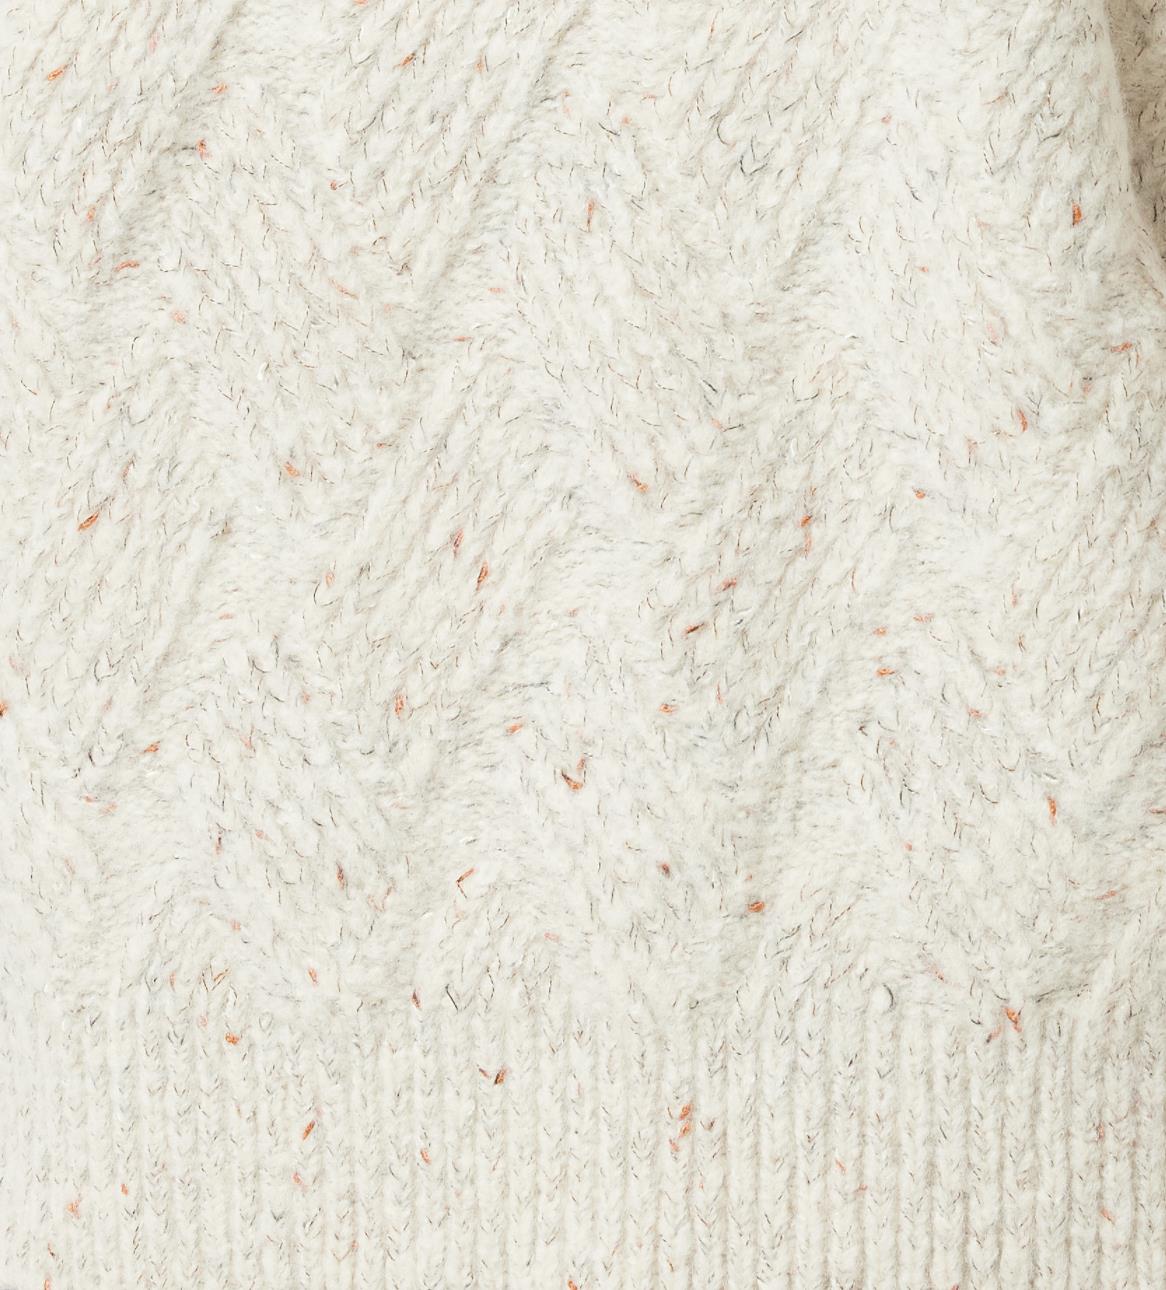 Ivory Fleece - Crewneck Sweater